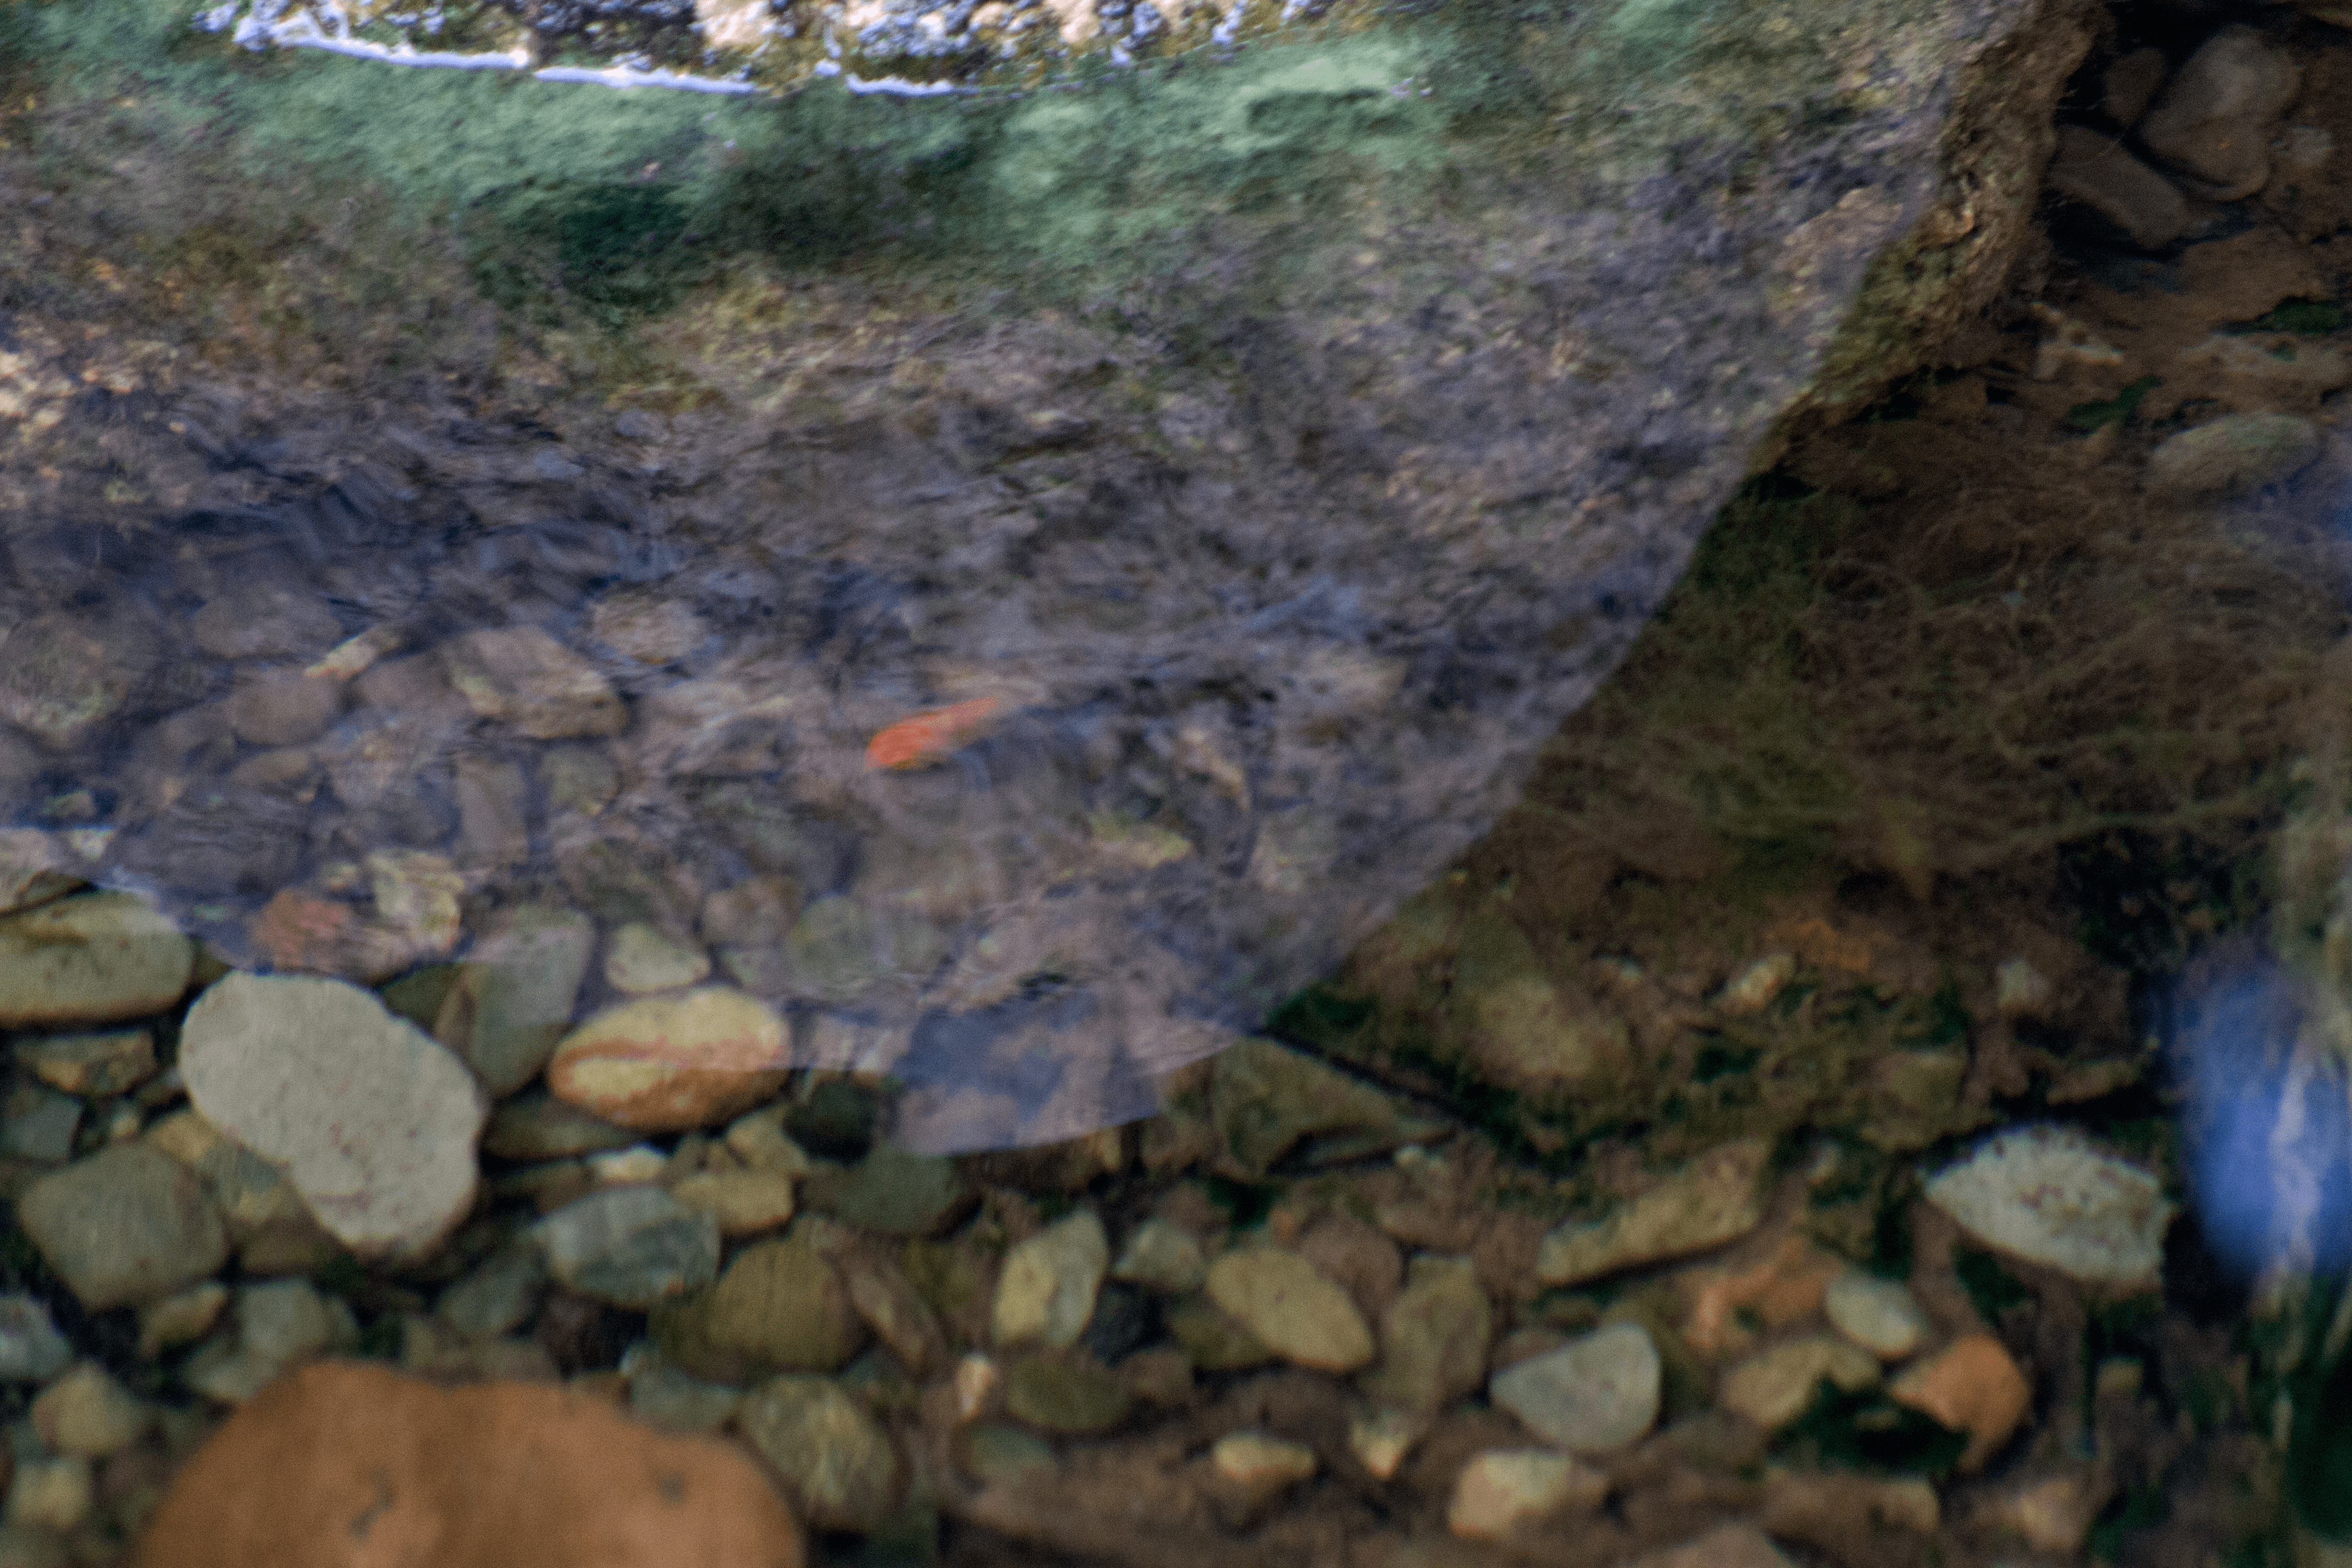 goldfish water change